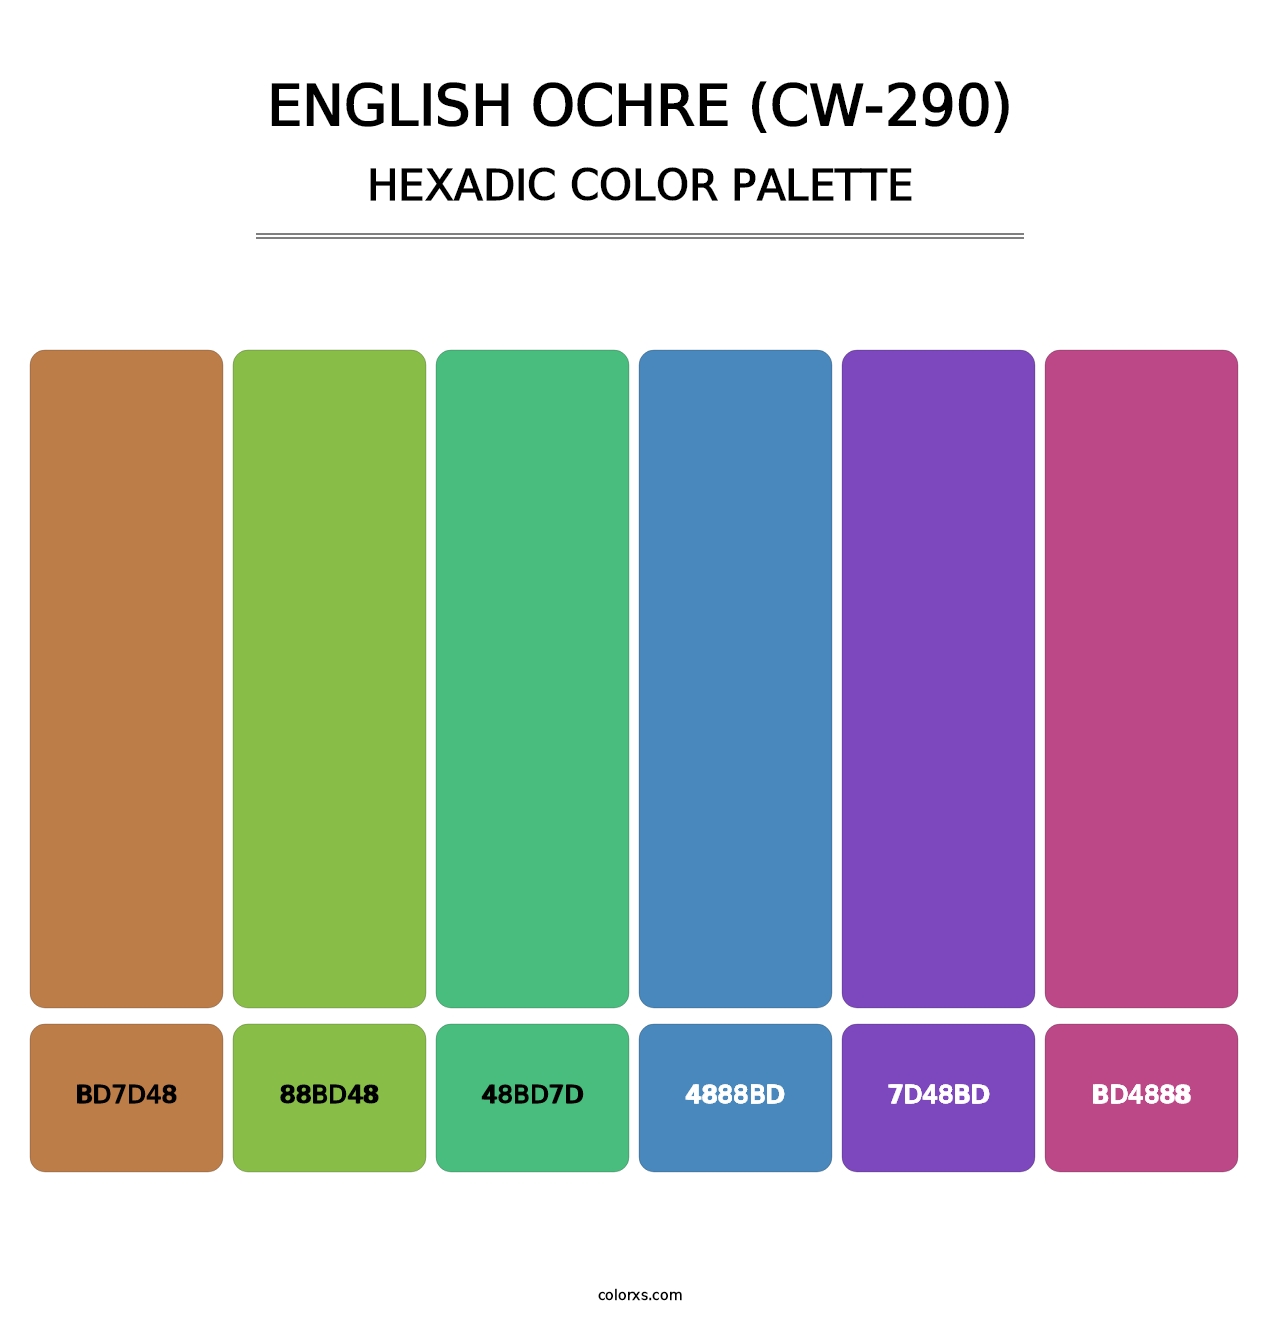 English Ochre (CW-290) - Hexadic Color Palette